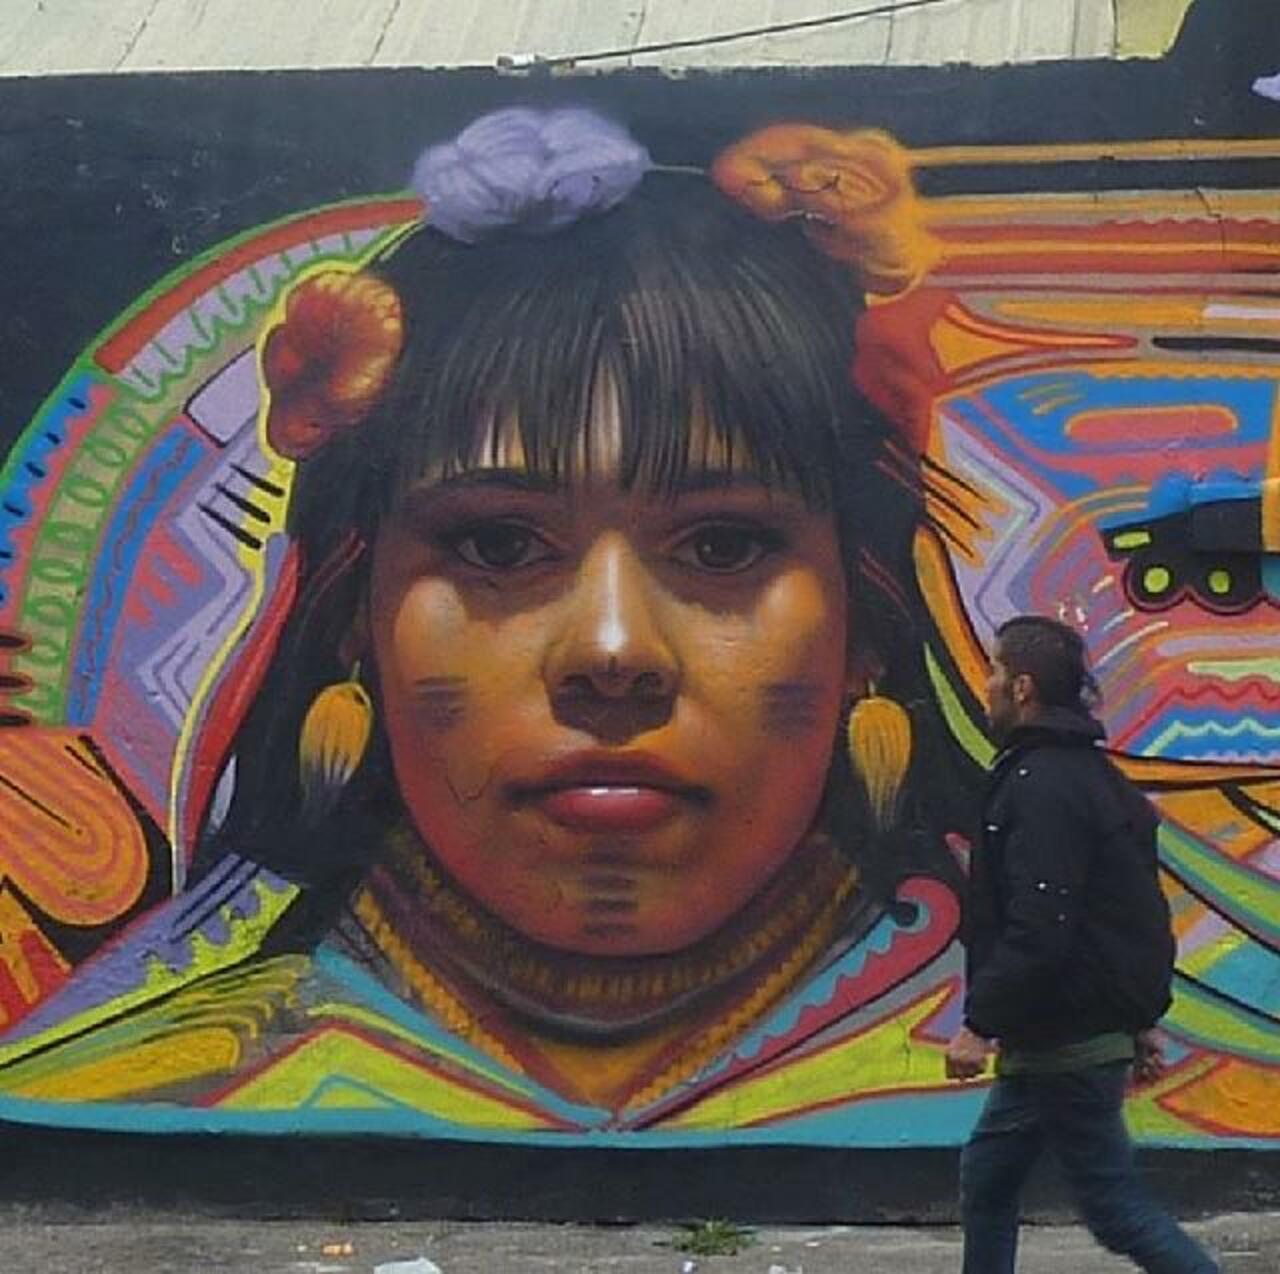 RT GoogleStreetArt "Street Art by the artist Daniel Cortez 

#art #mural #graffiti #streetart http://t.co/so1aZOdFPb"